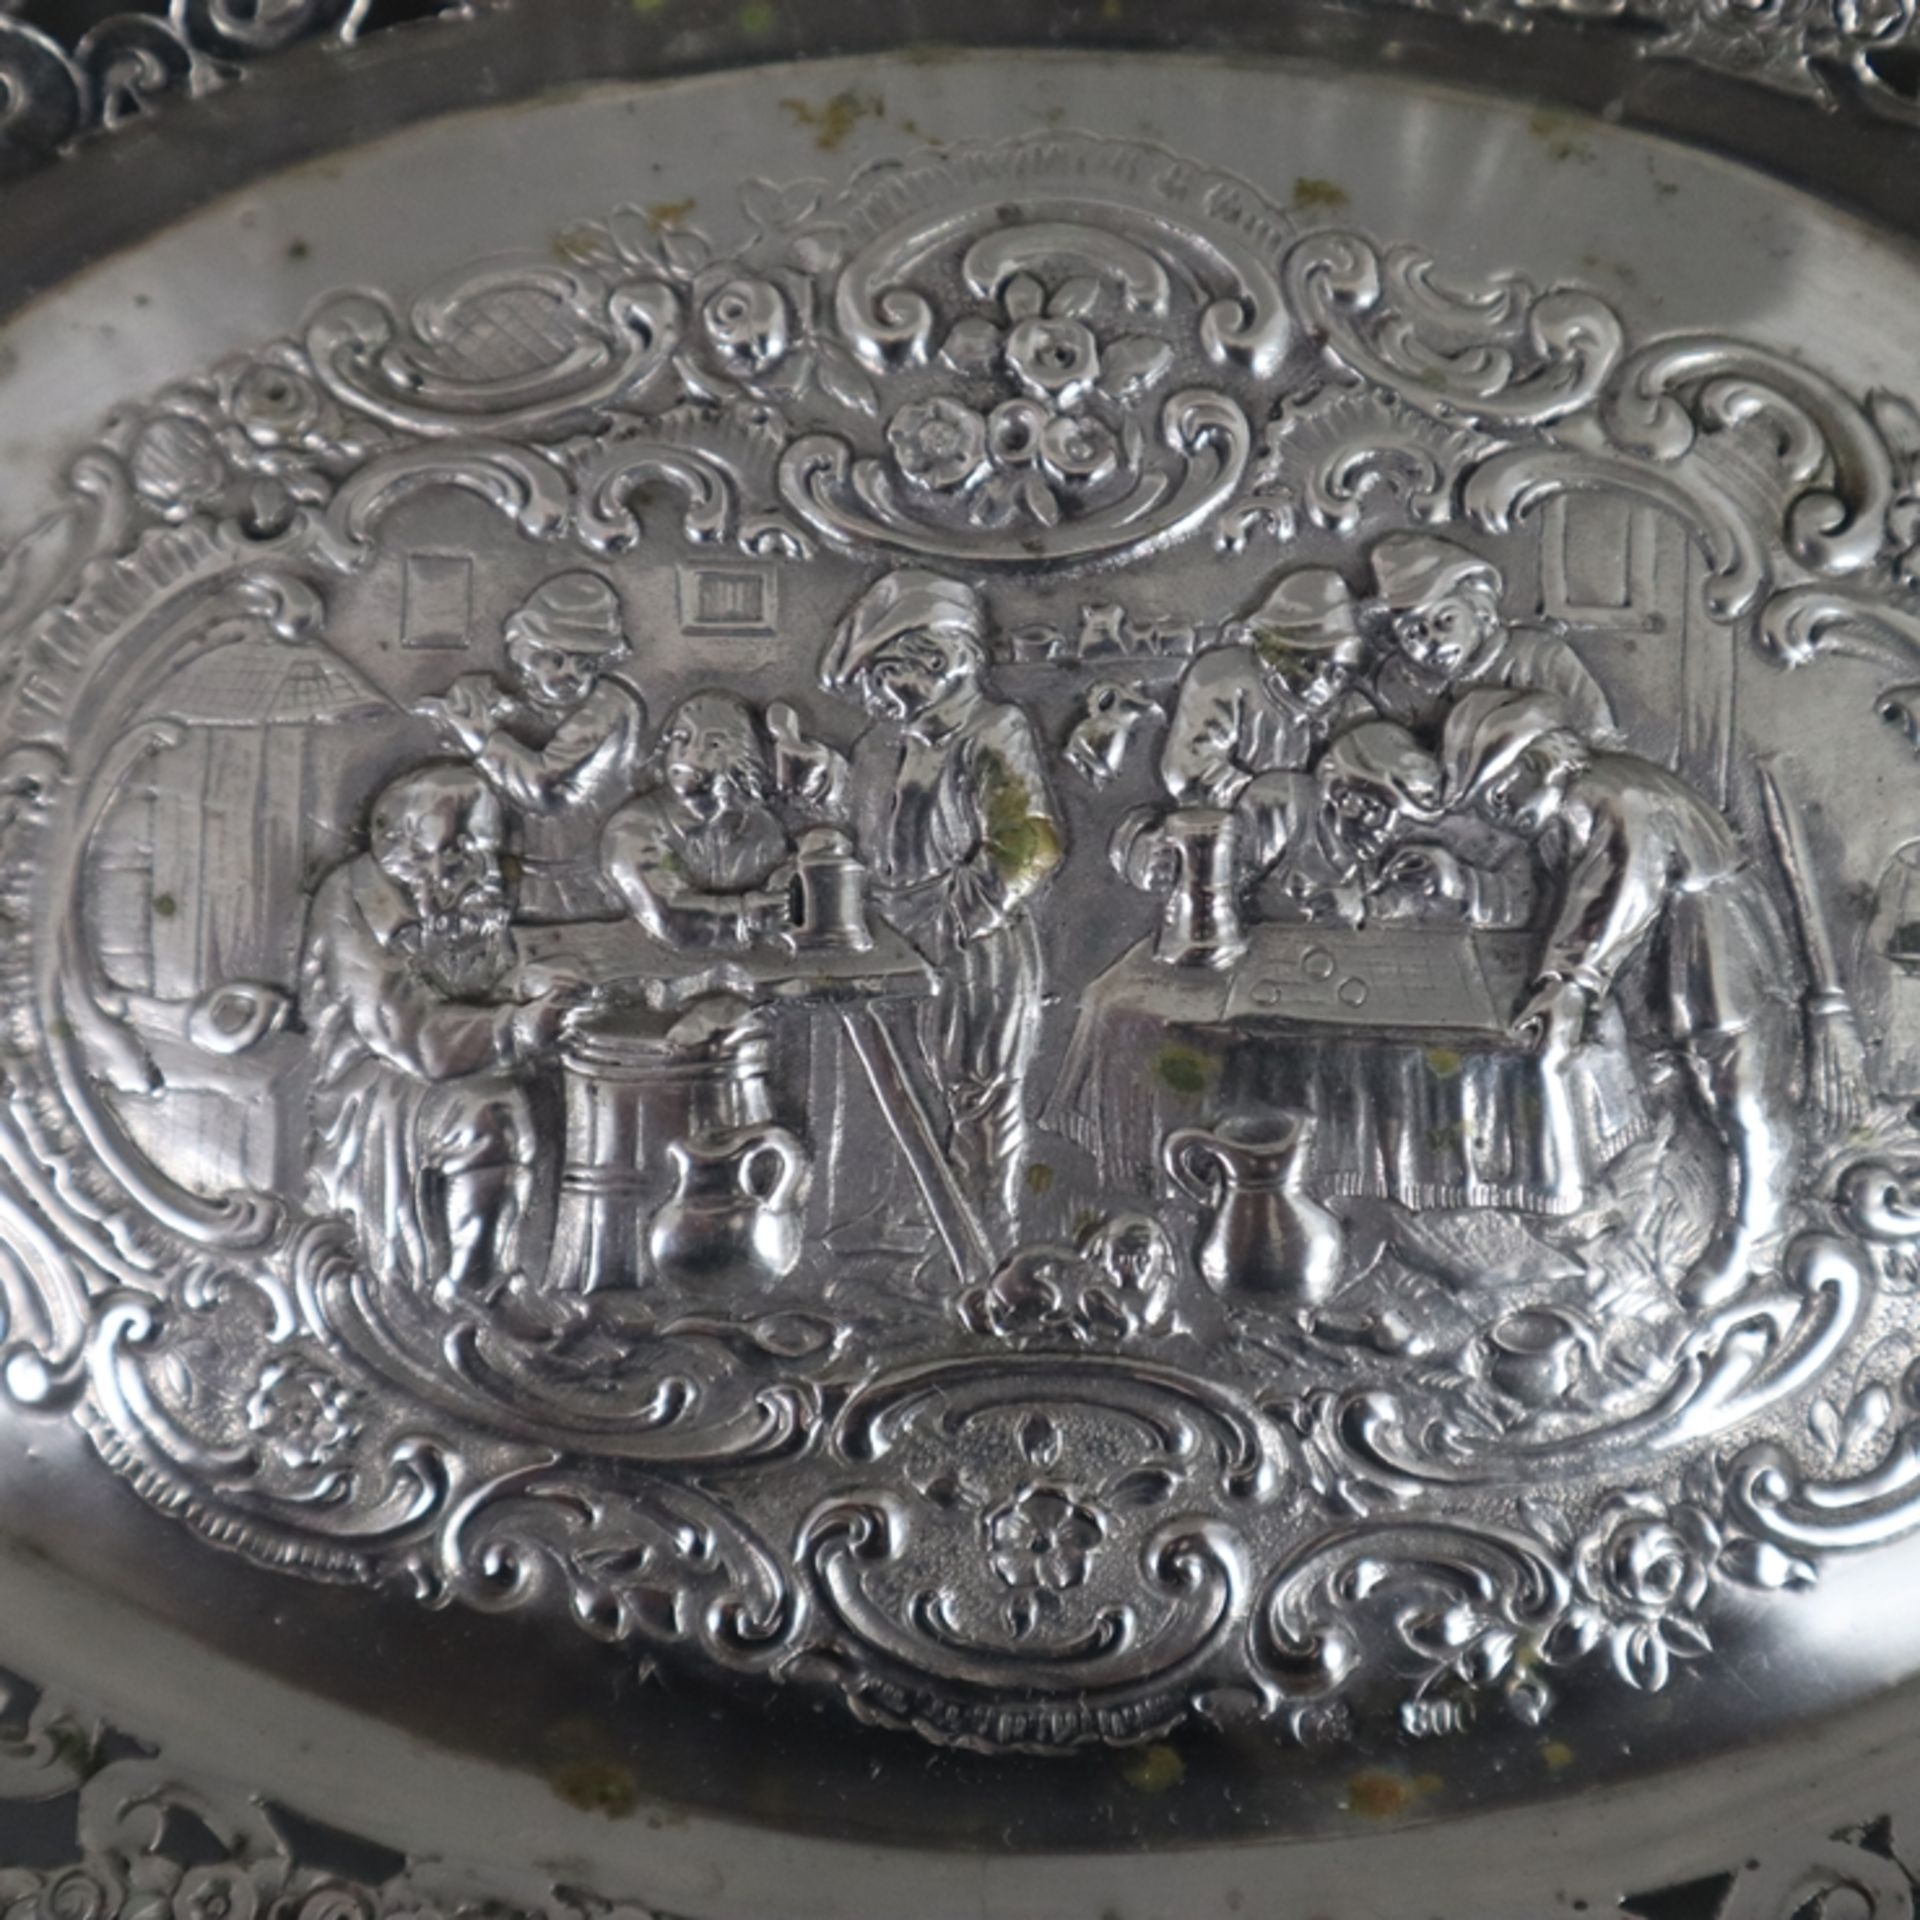 Üppig dekorierte Korbschale - deutsch, Silber 800/000, gestempelt, oval, geschweifte filigran durch - Bild 3 aus 10